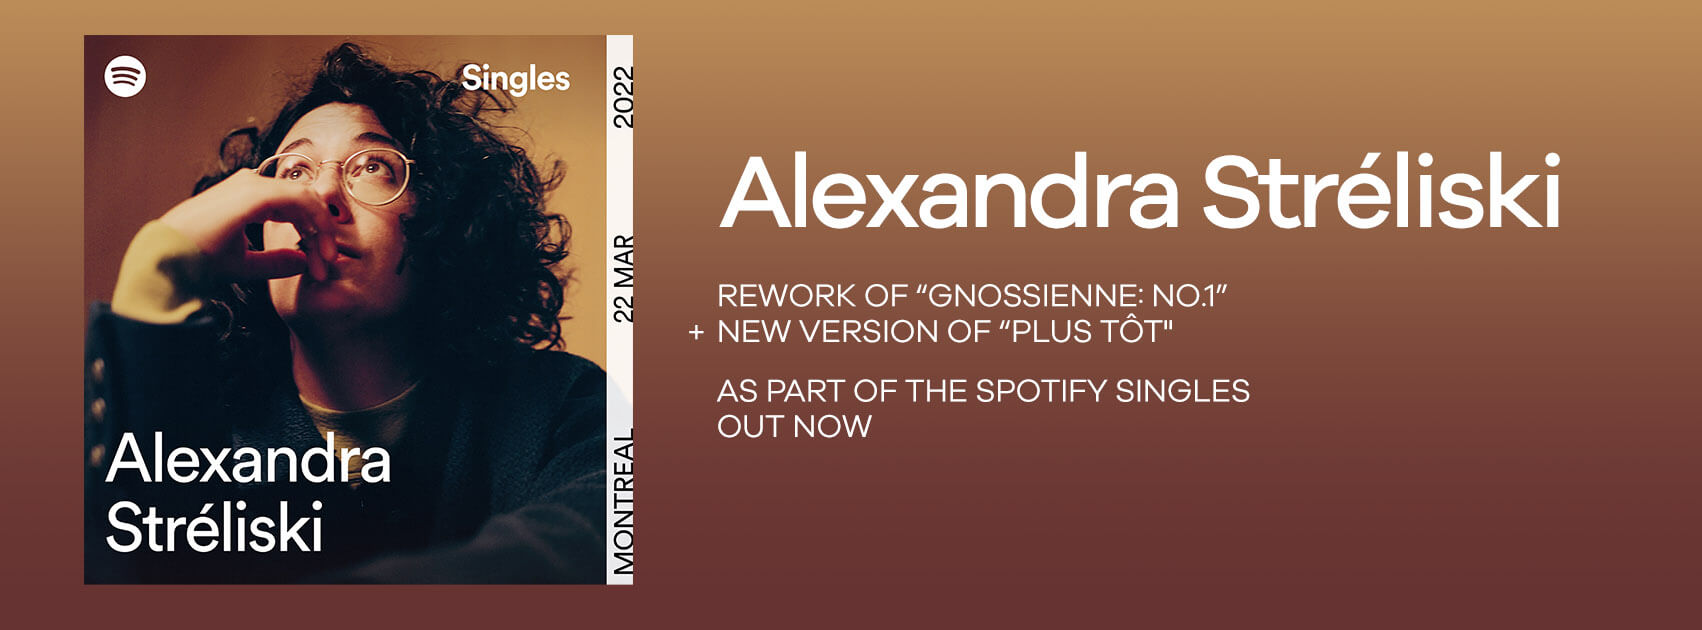 AlexandraStreliski-SpotifySingles-SCRWebsite-EN